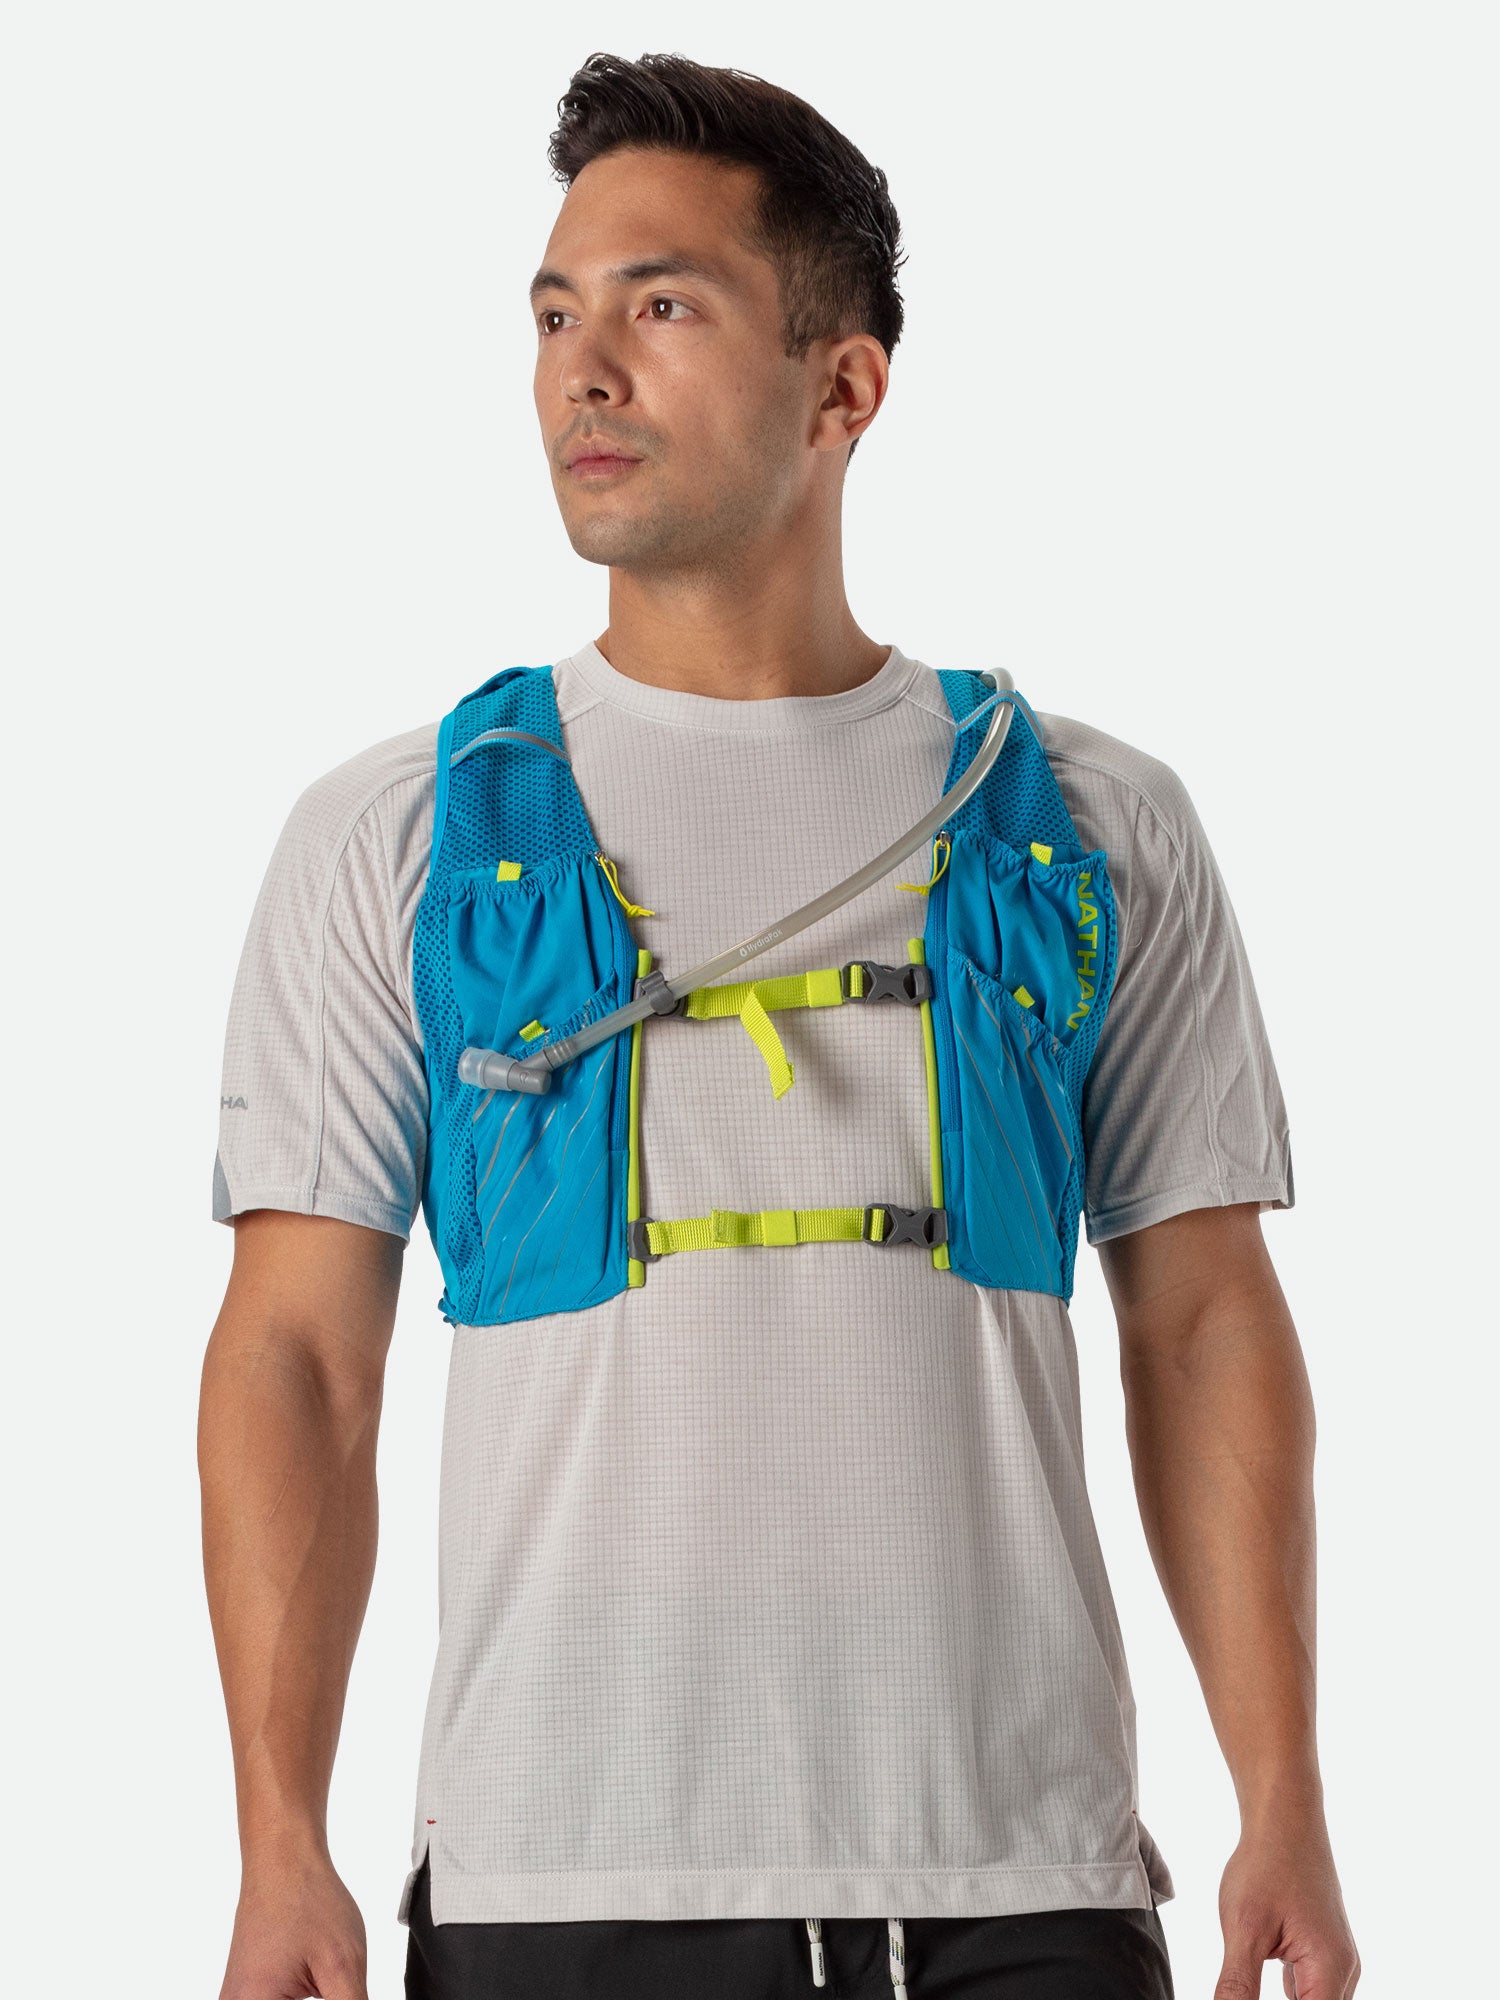 Running Hydration Vest - Running Vest for Women & Men - Hydration